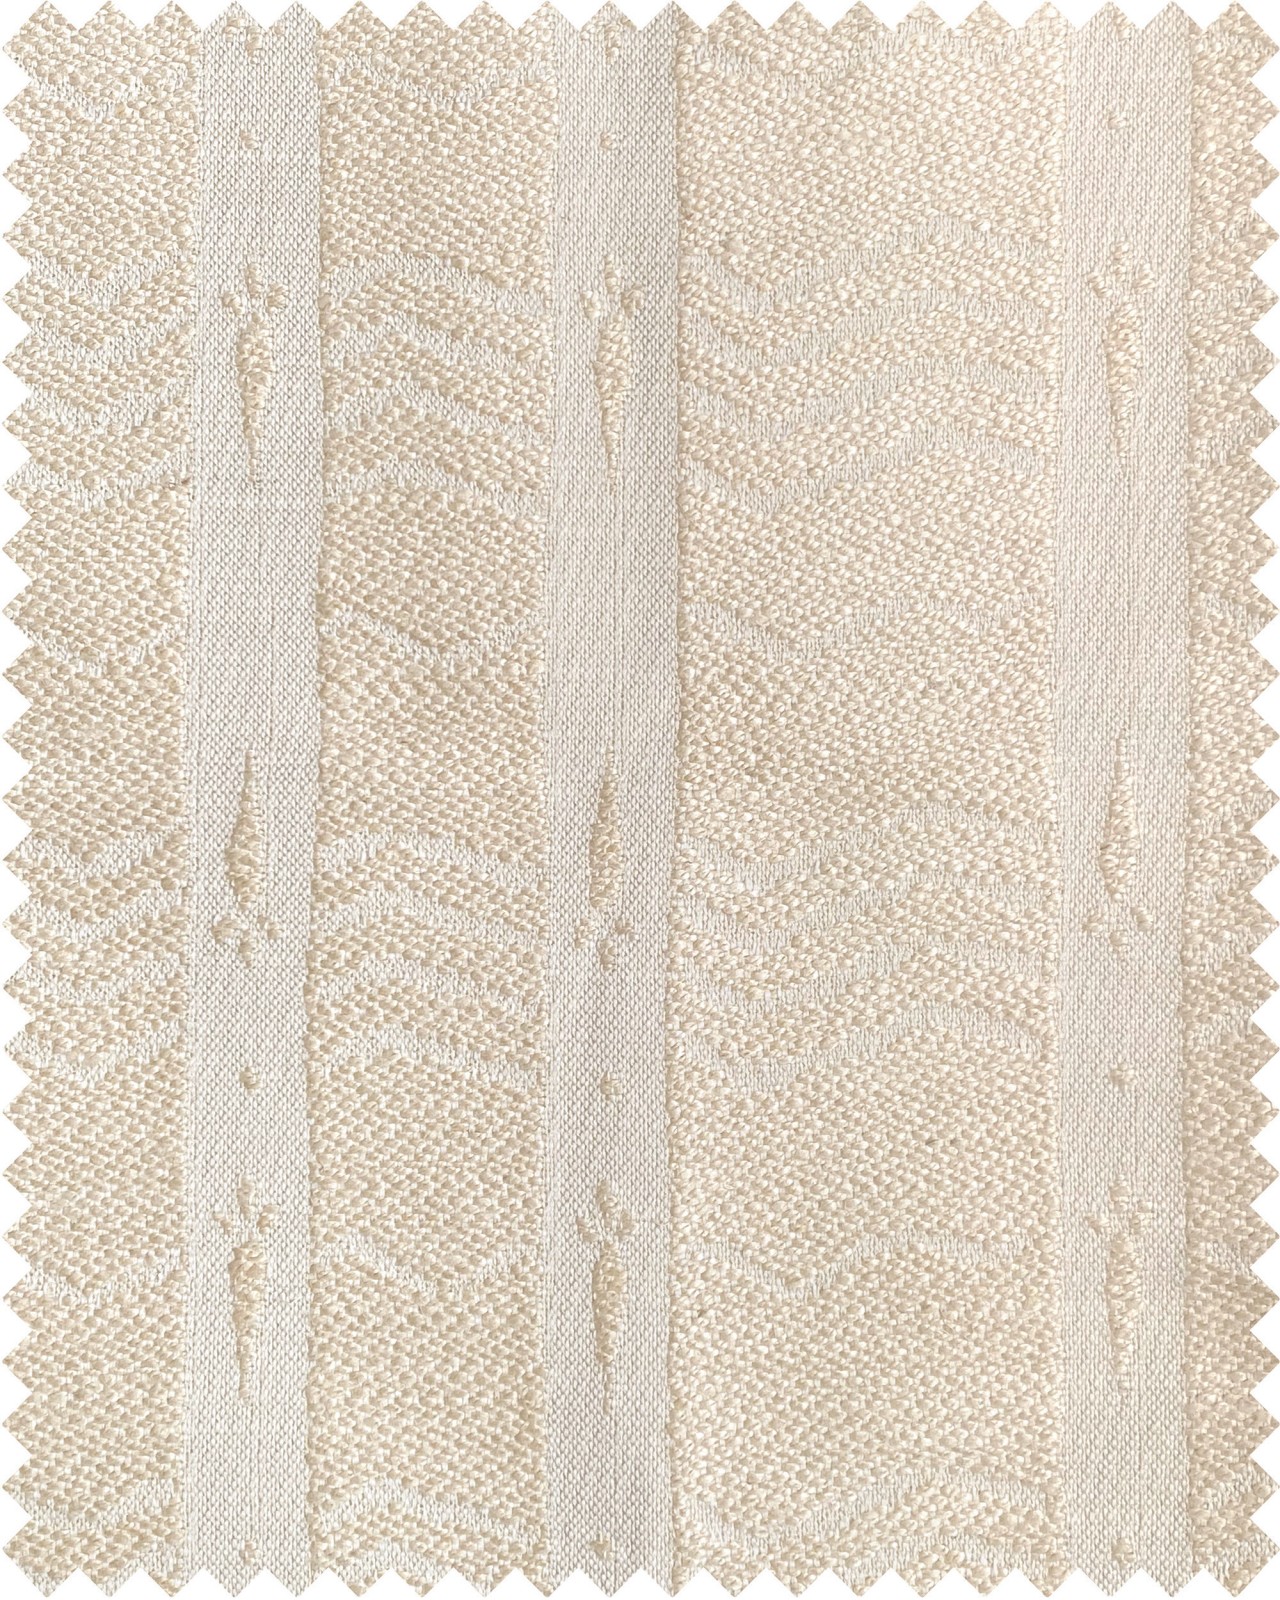 WHITELAKE Jacquard Woven Fabric